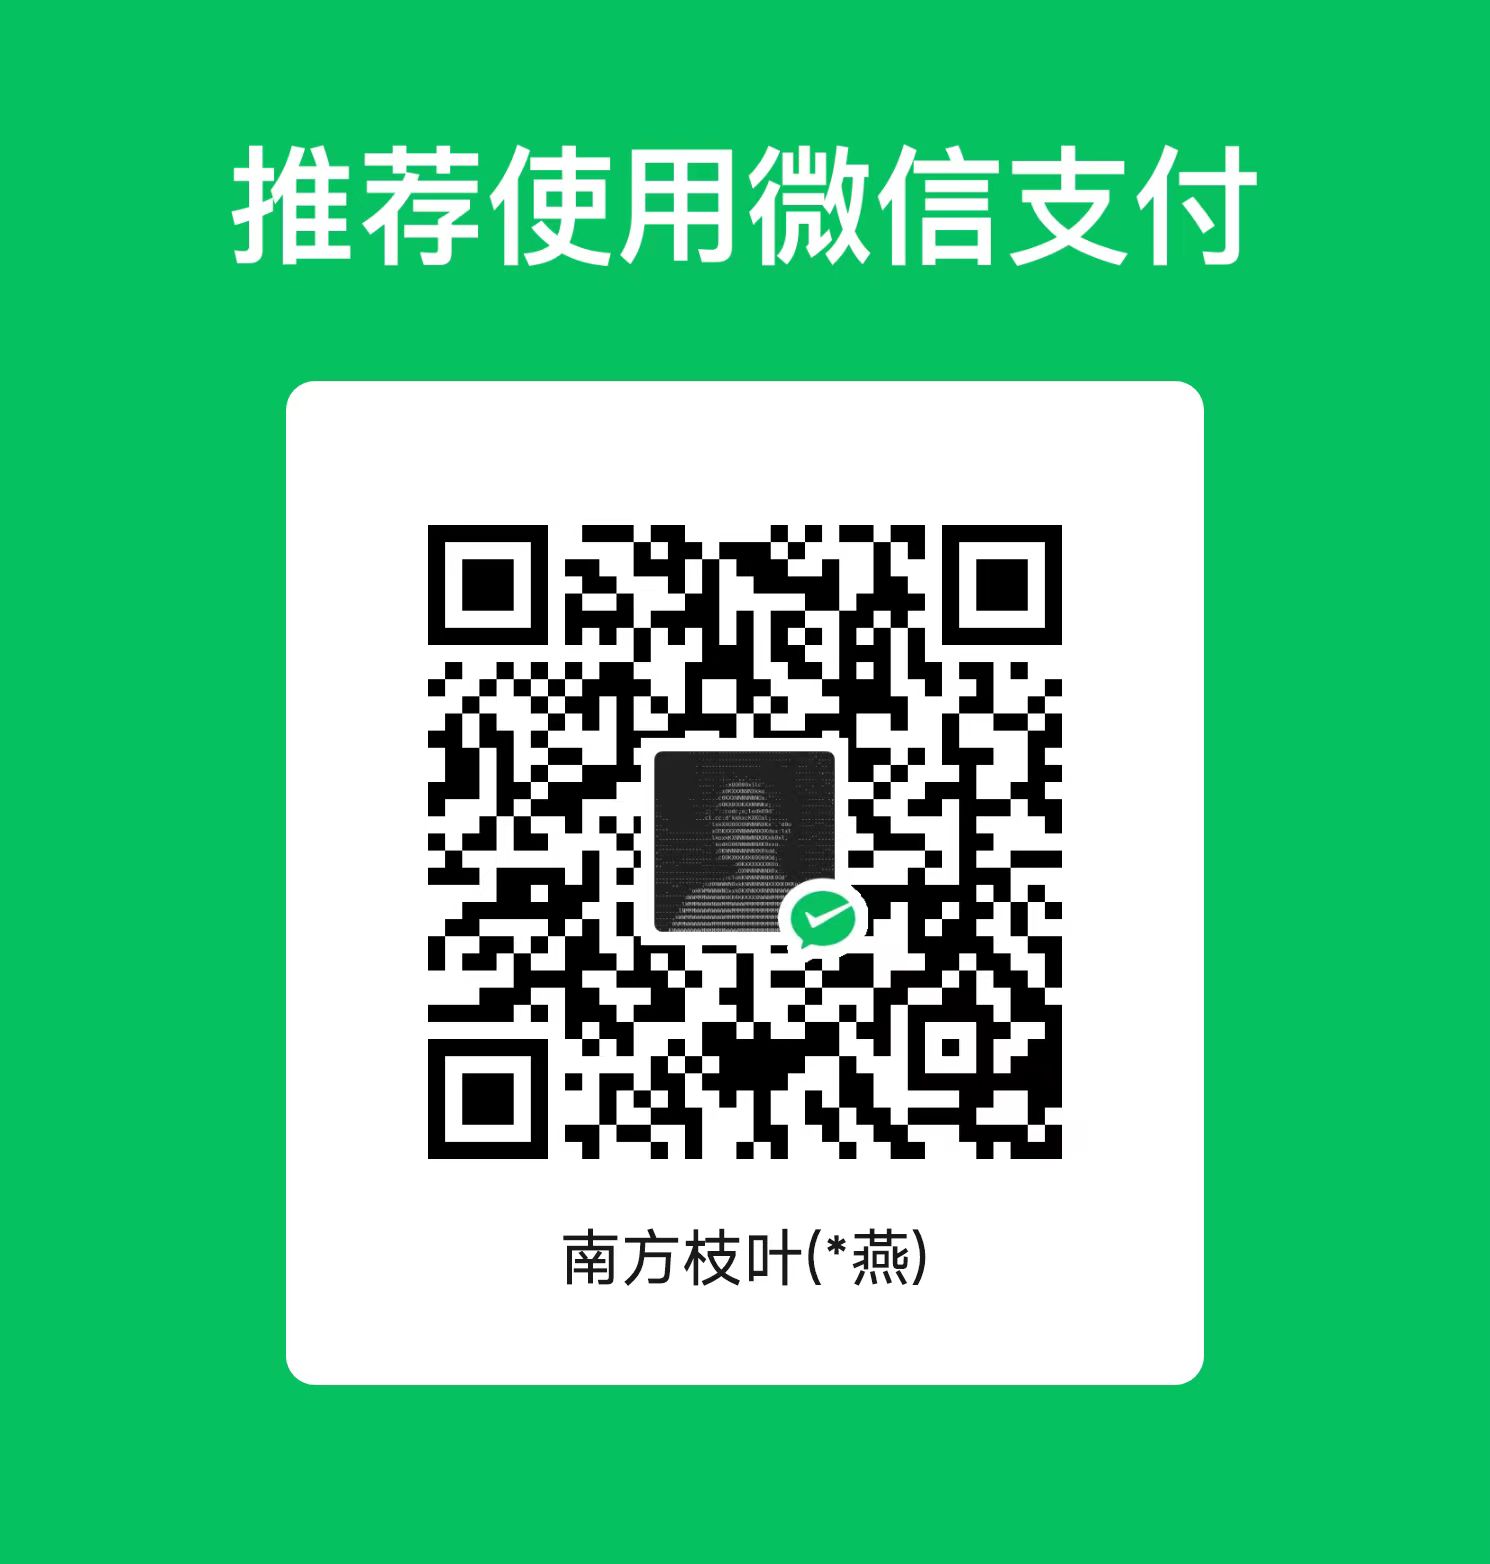 南方枝叶 WeChat Pay